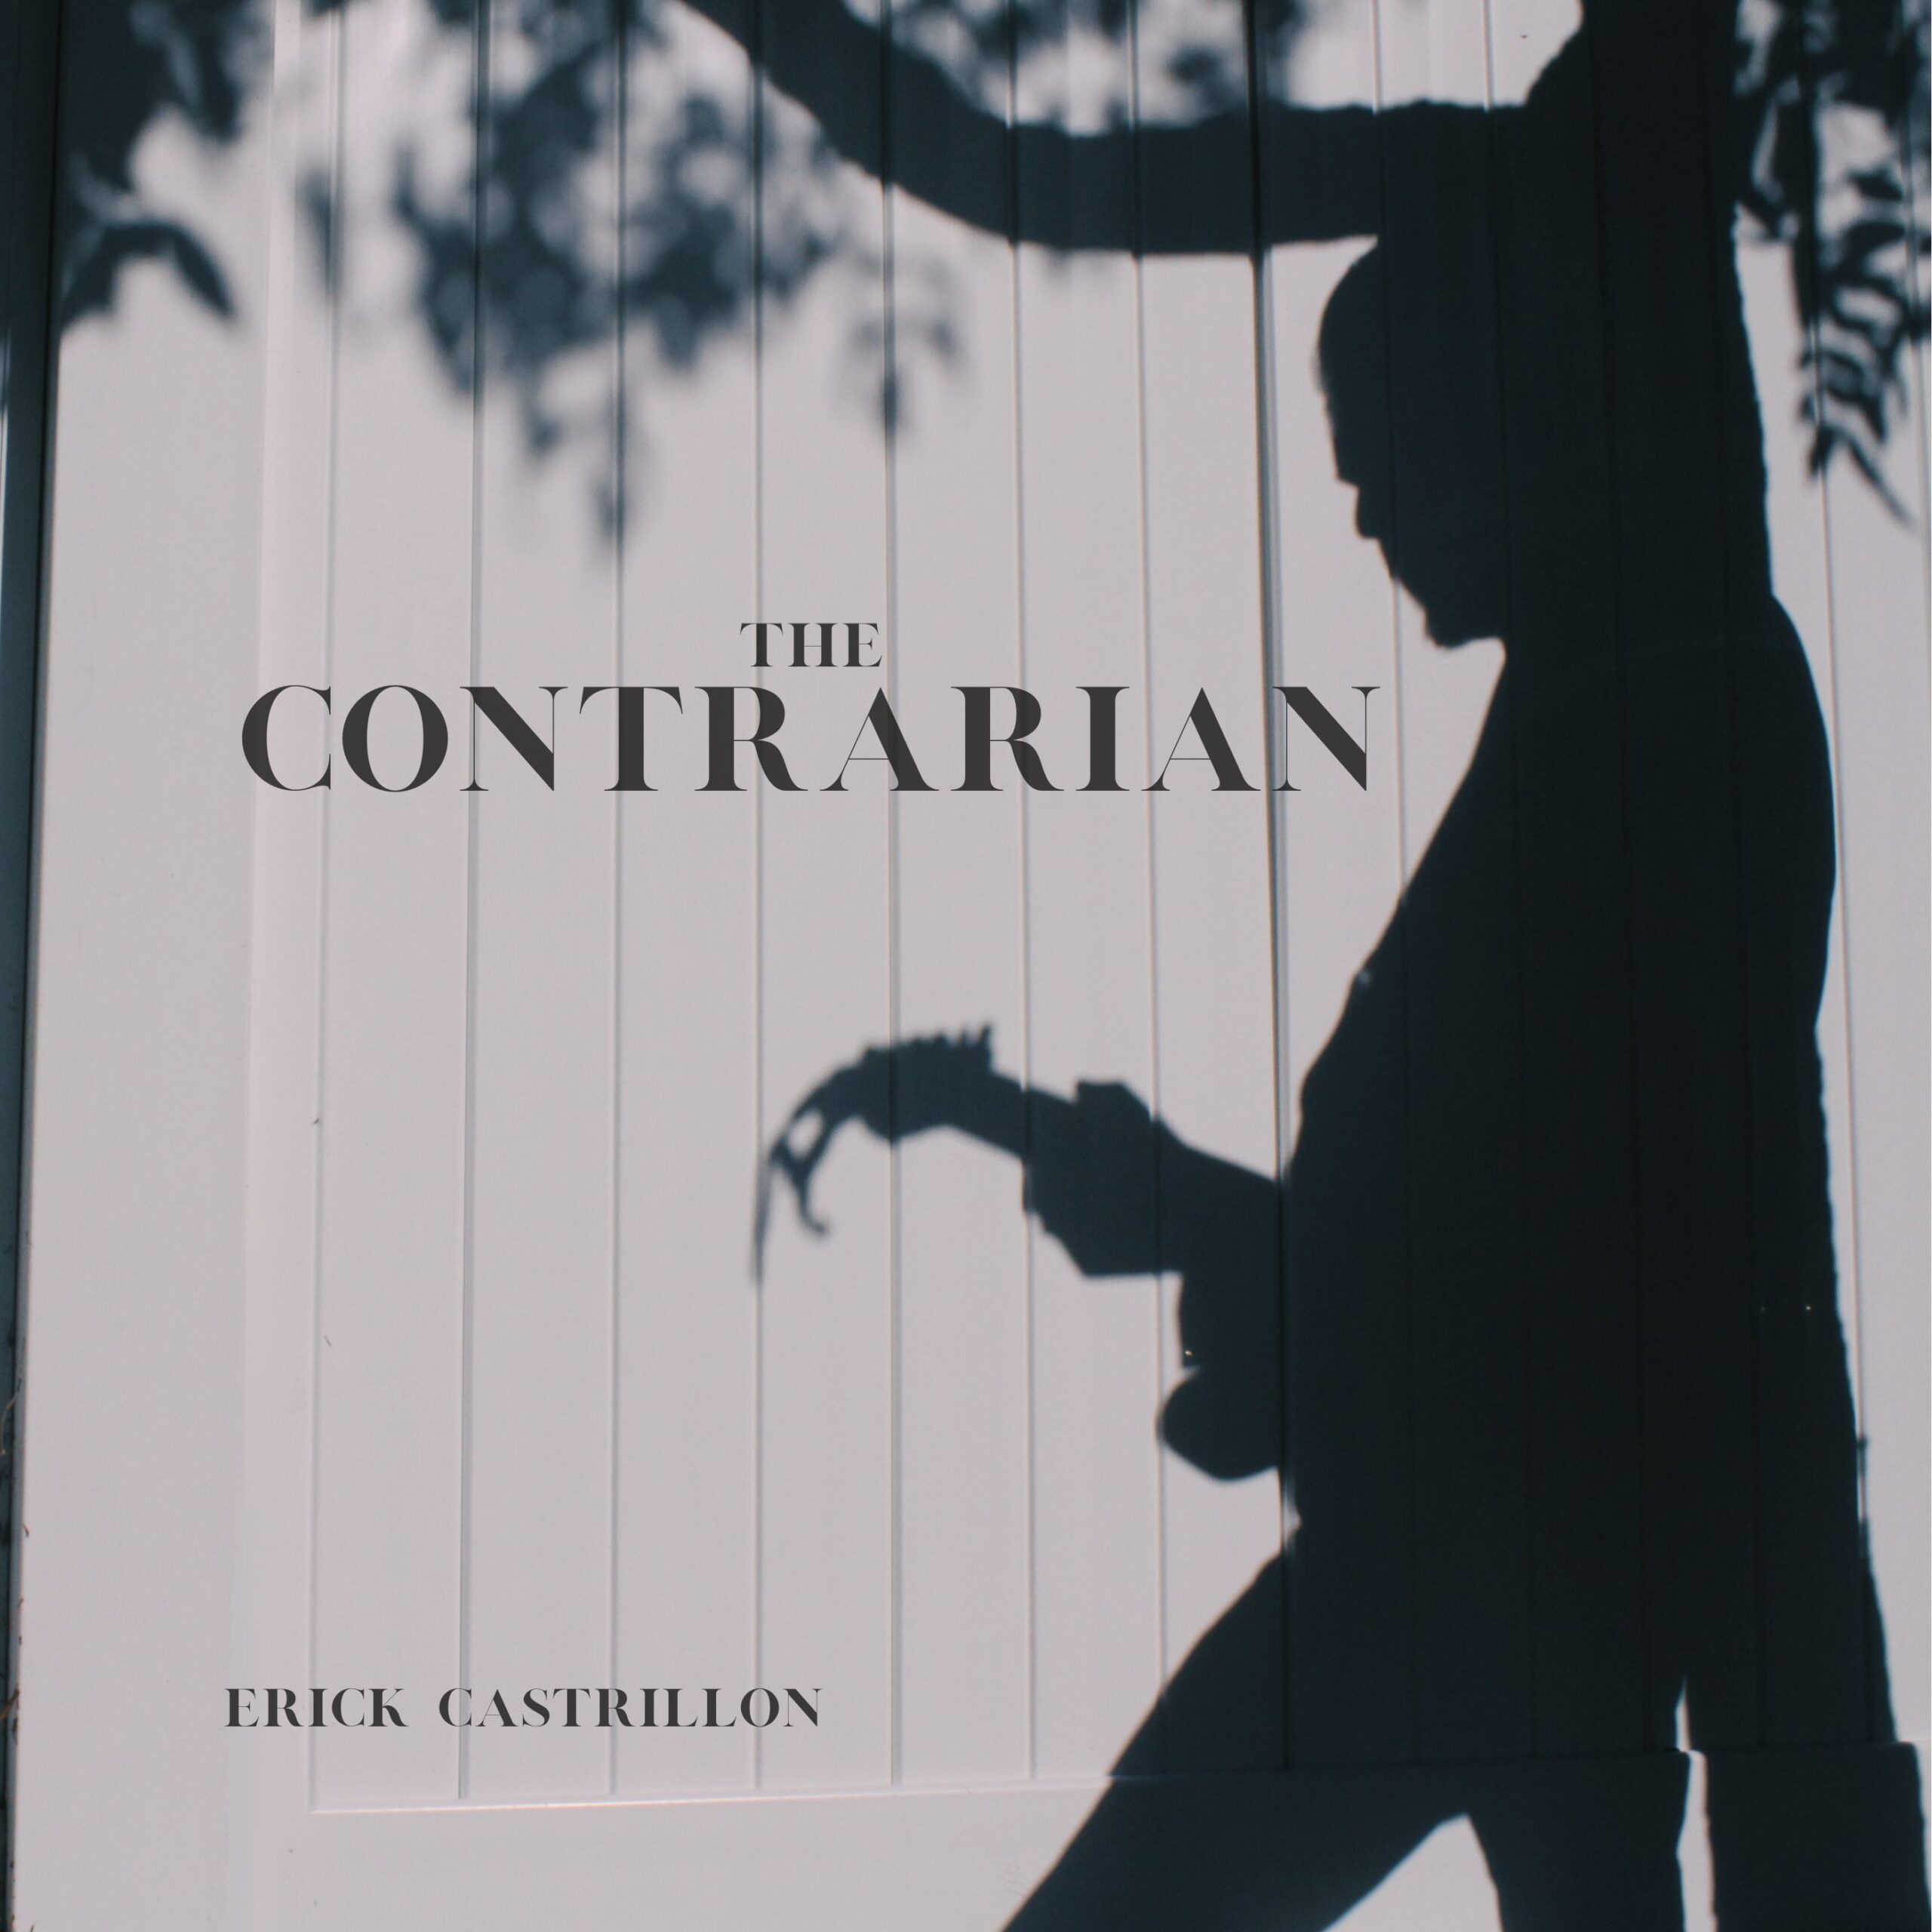 The Contrarian by Erick Castrillon cover art